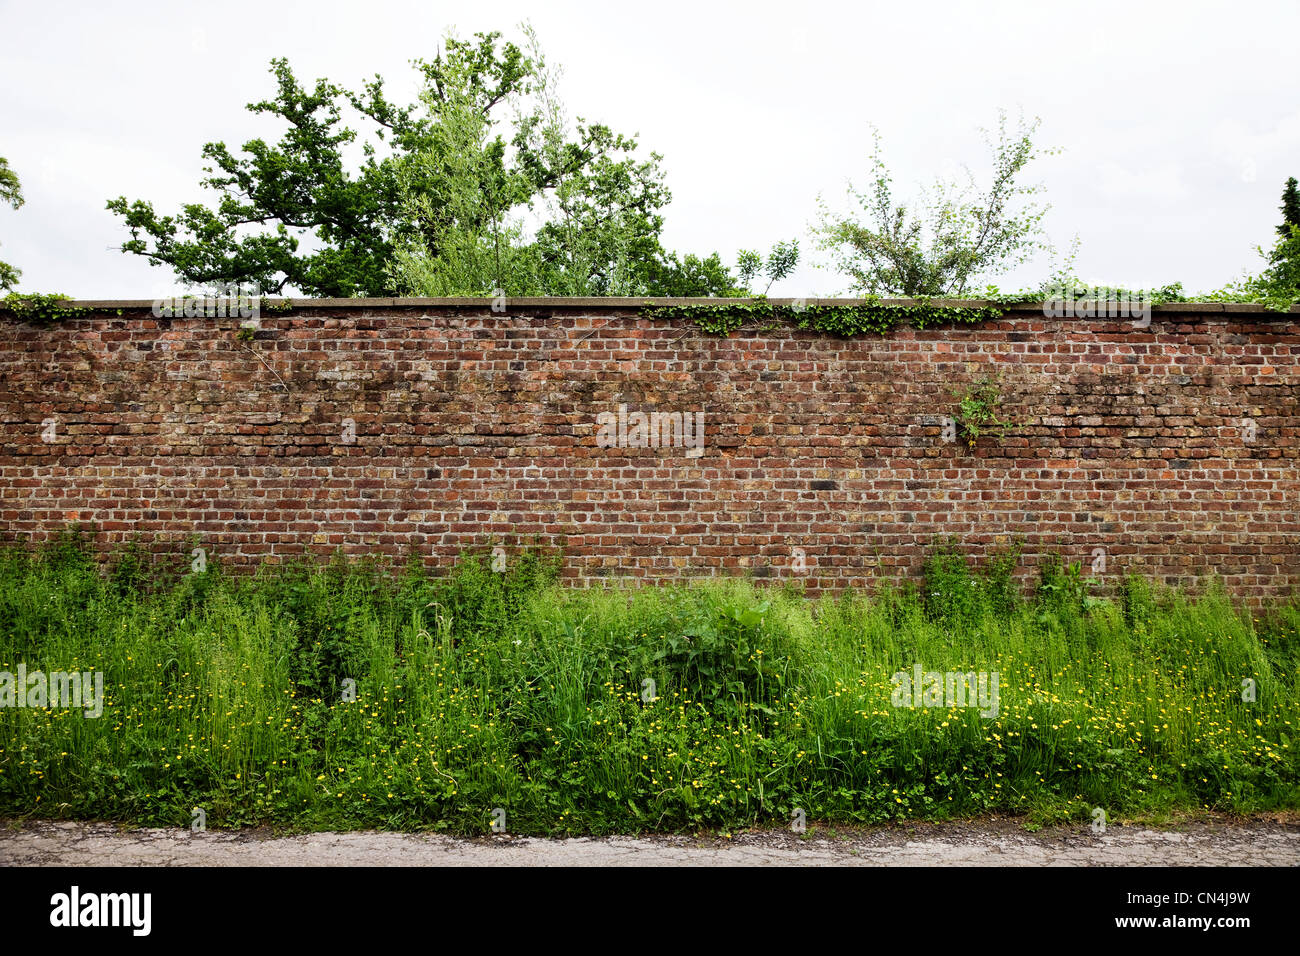 Brick wall and plants Stock Photo